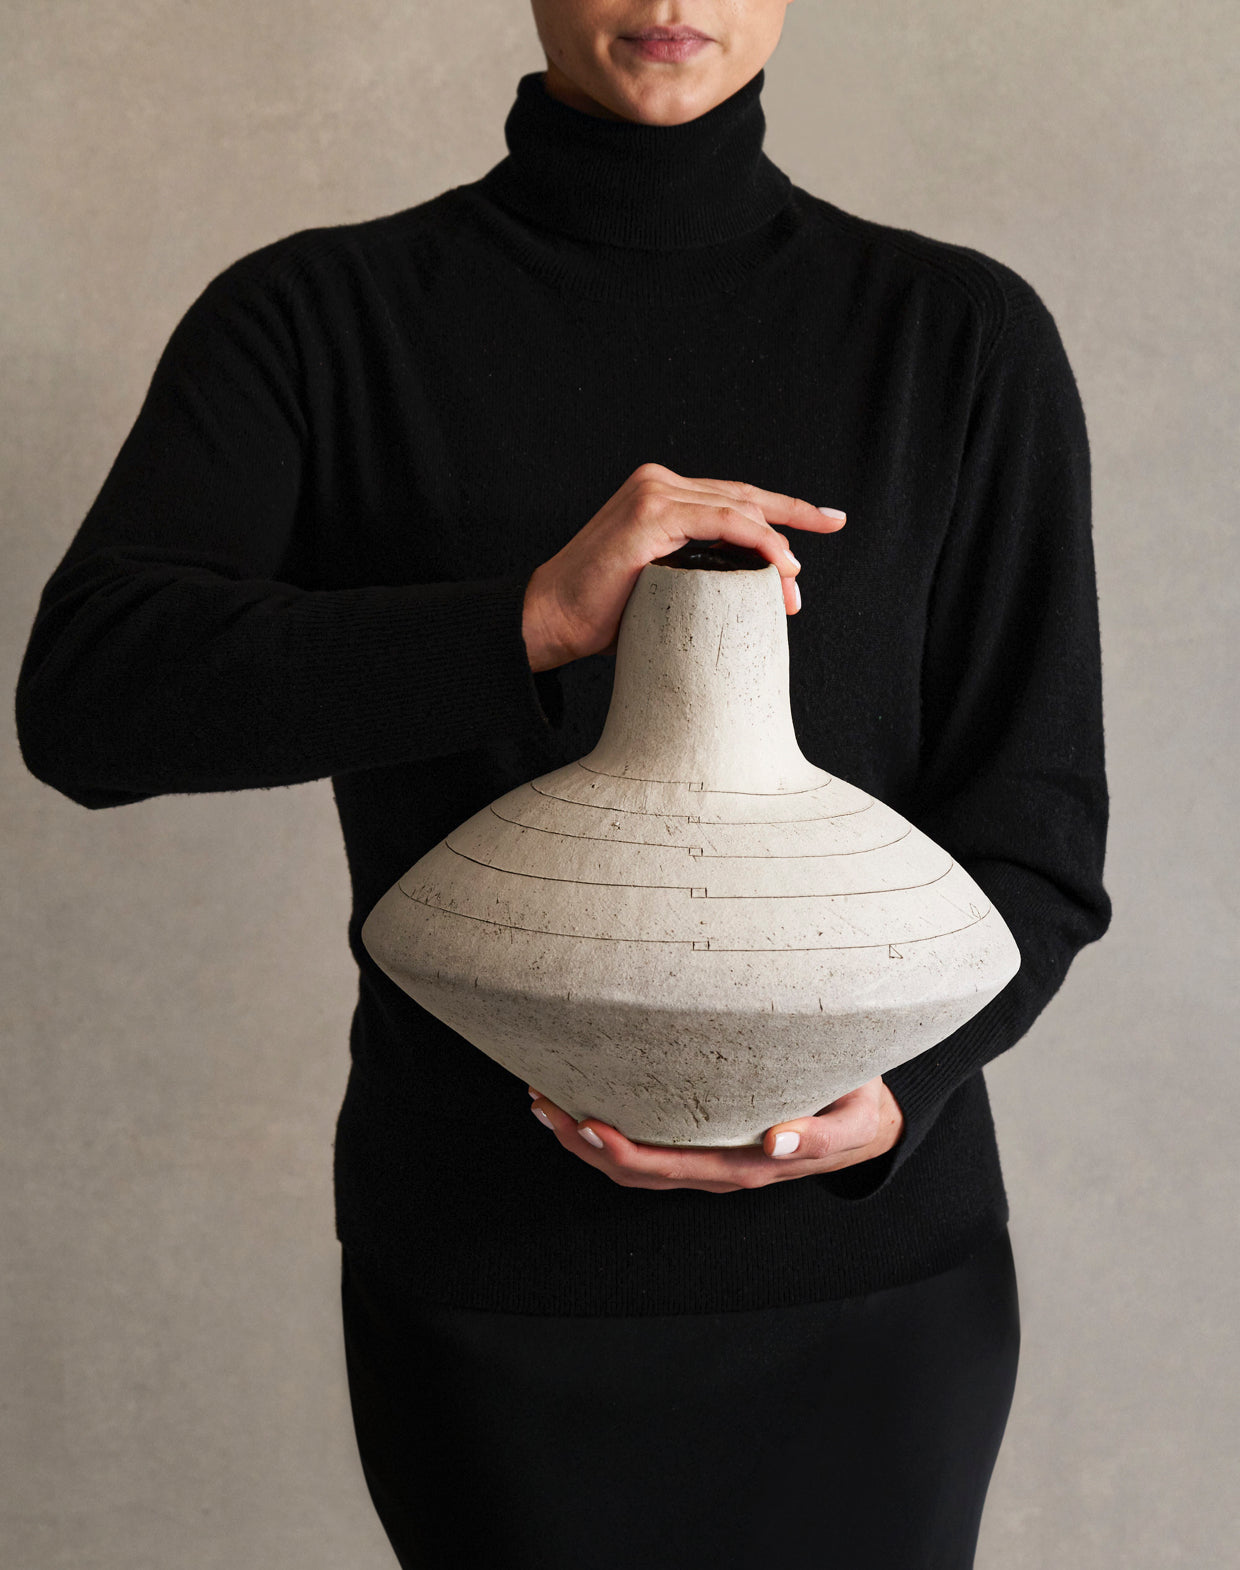 Rick Hintze Coiled Stoneware Vessel, "Untitled" No. 16